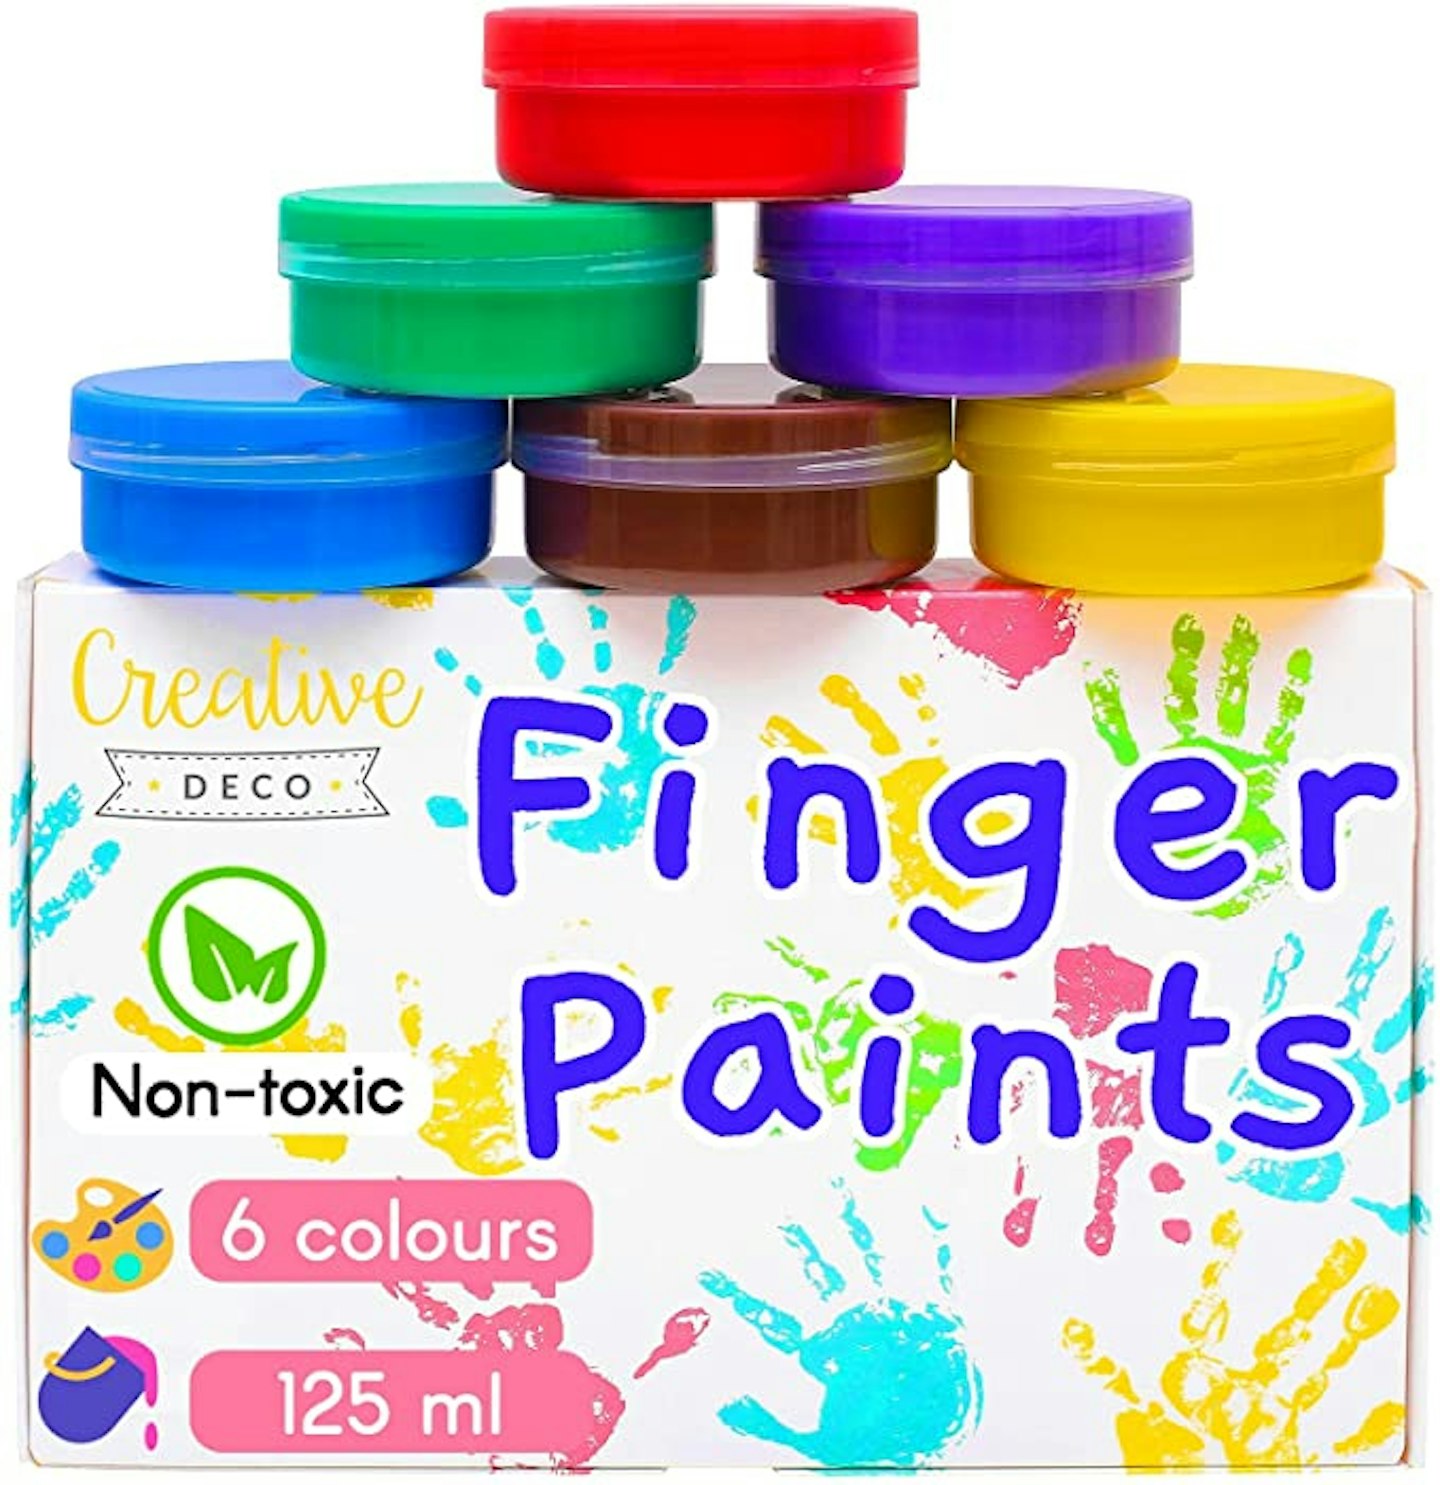 Carioca finger paint baby super washable 6 color 80 ML